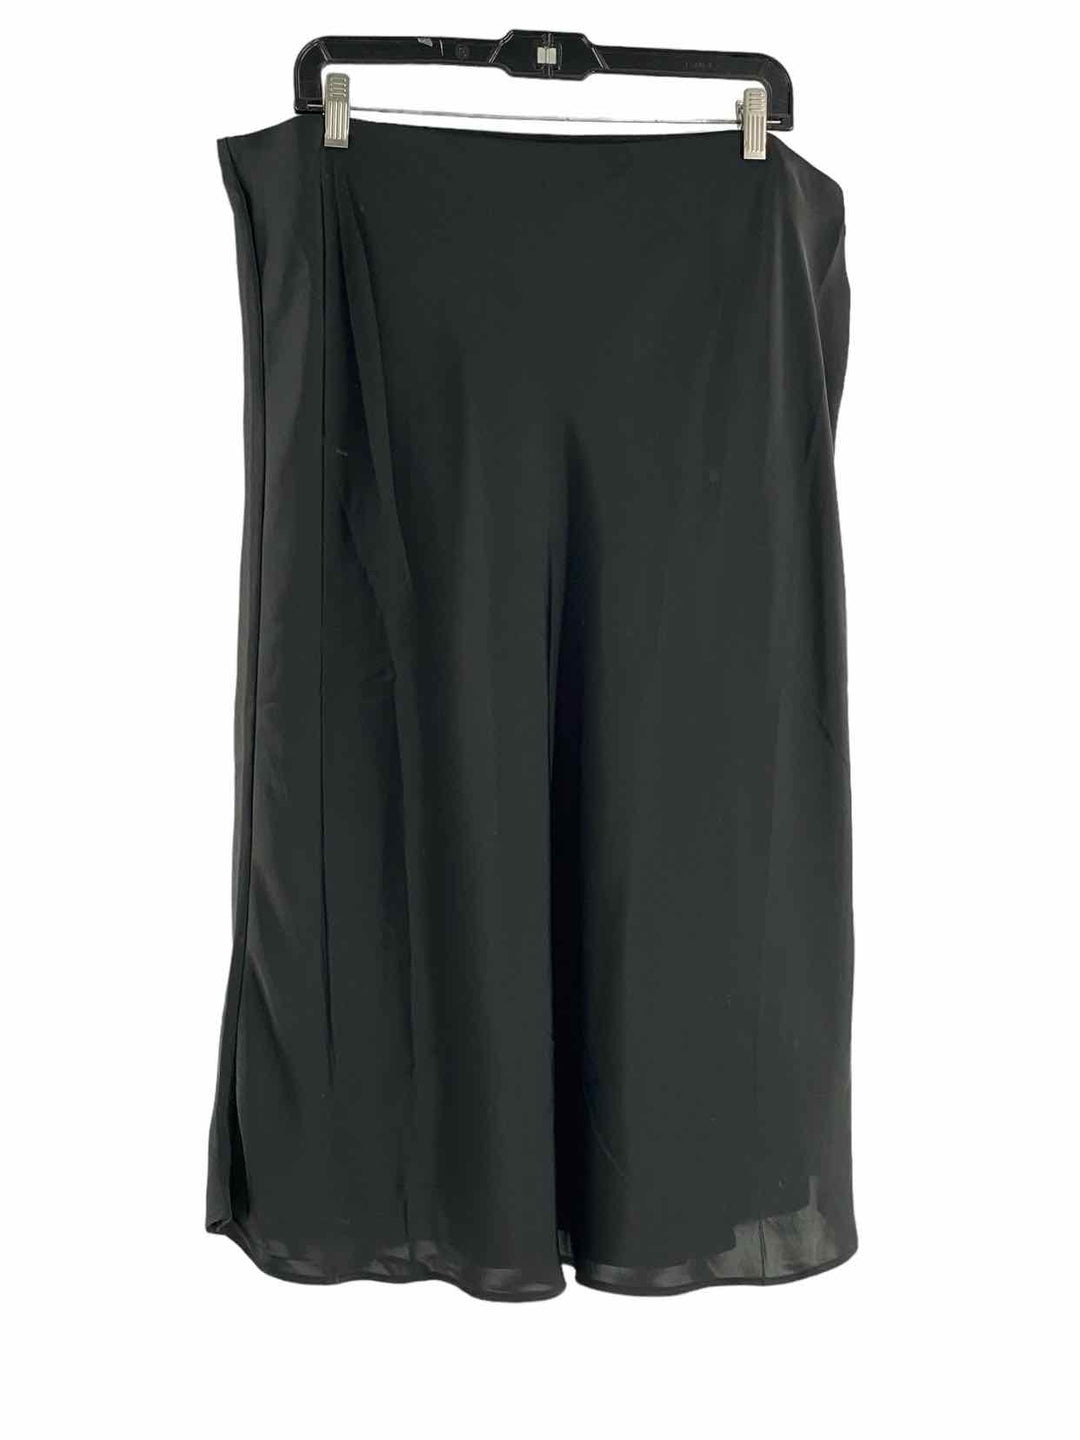 Nordstrom Size XL Black Skirt